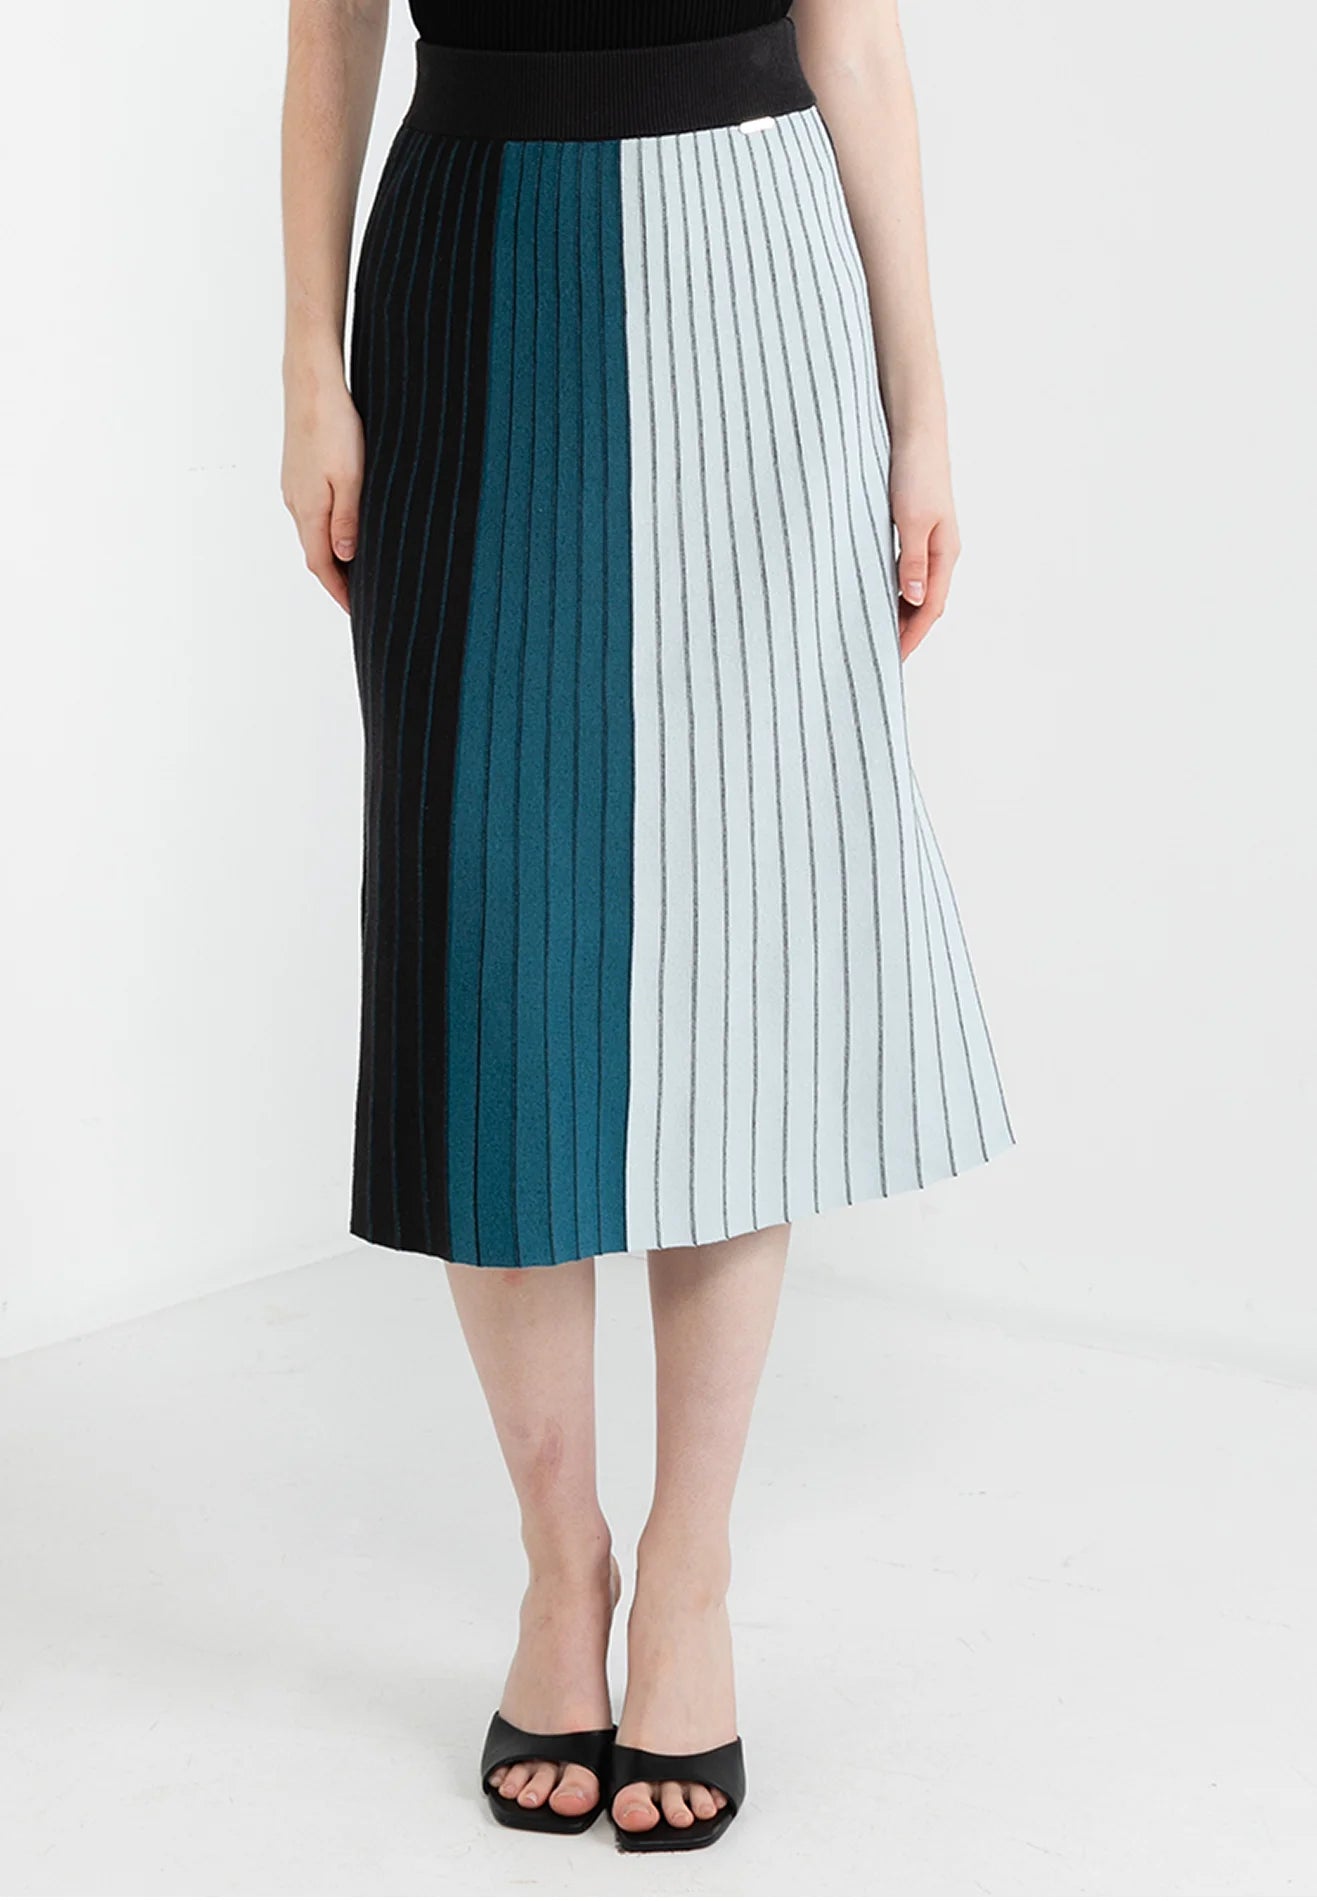 ELLE Apparel Mixed Color Tone A-Line Midi Skirt